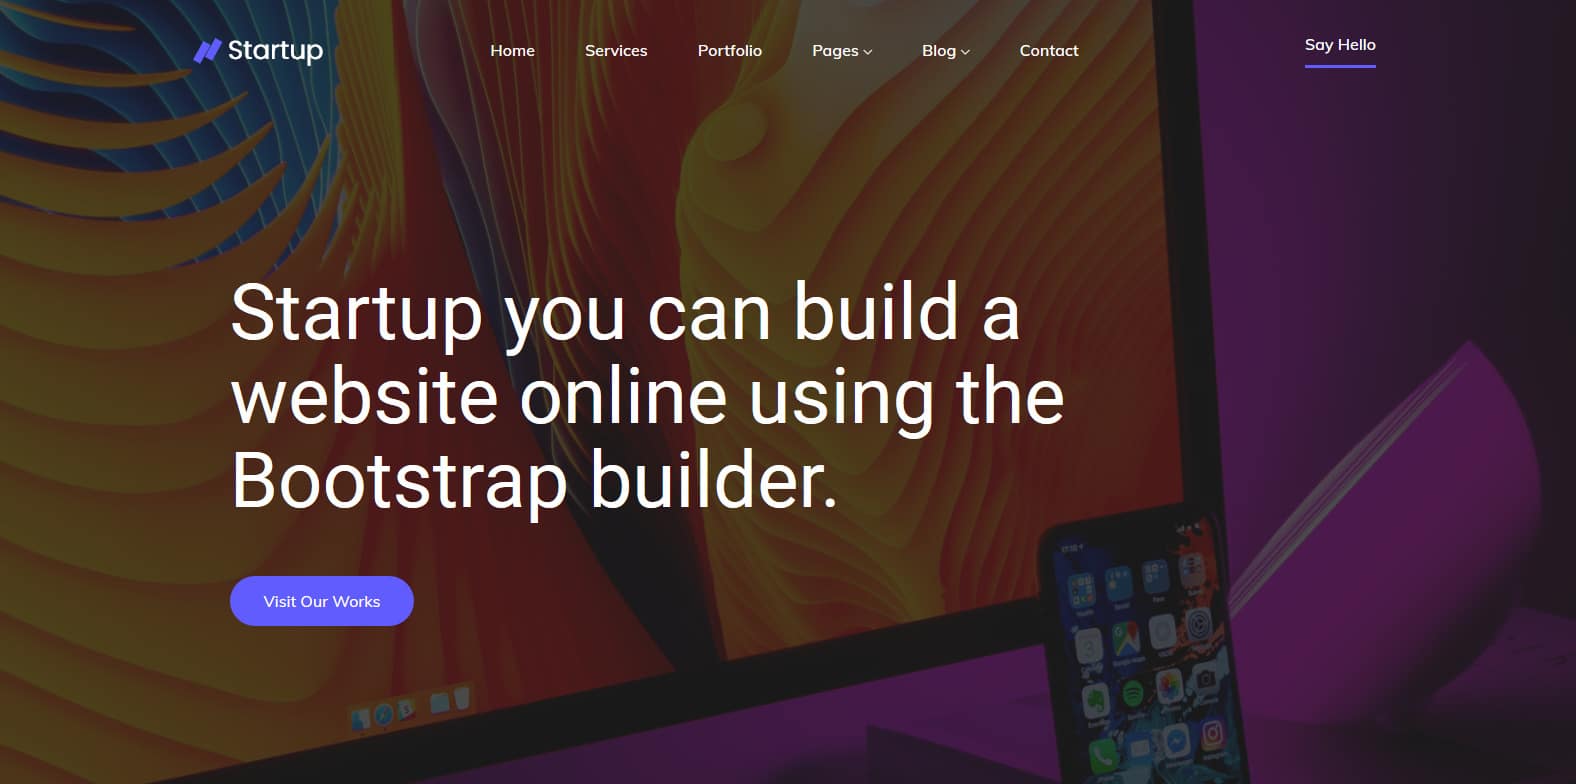 startup-2-startup-website-template